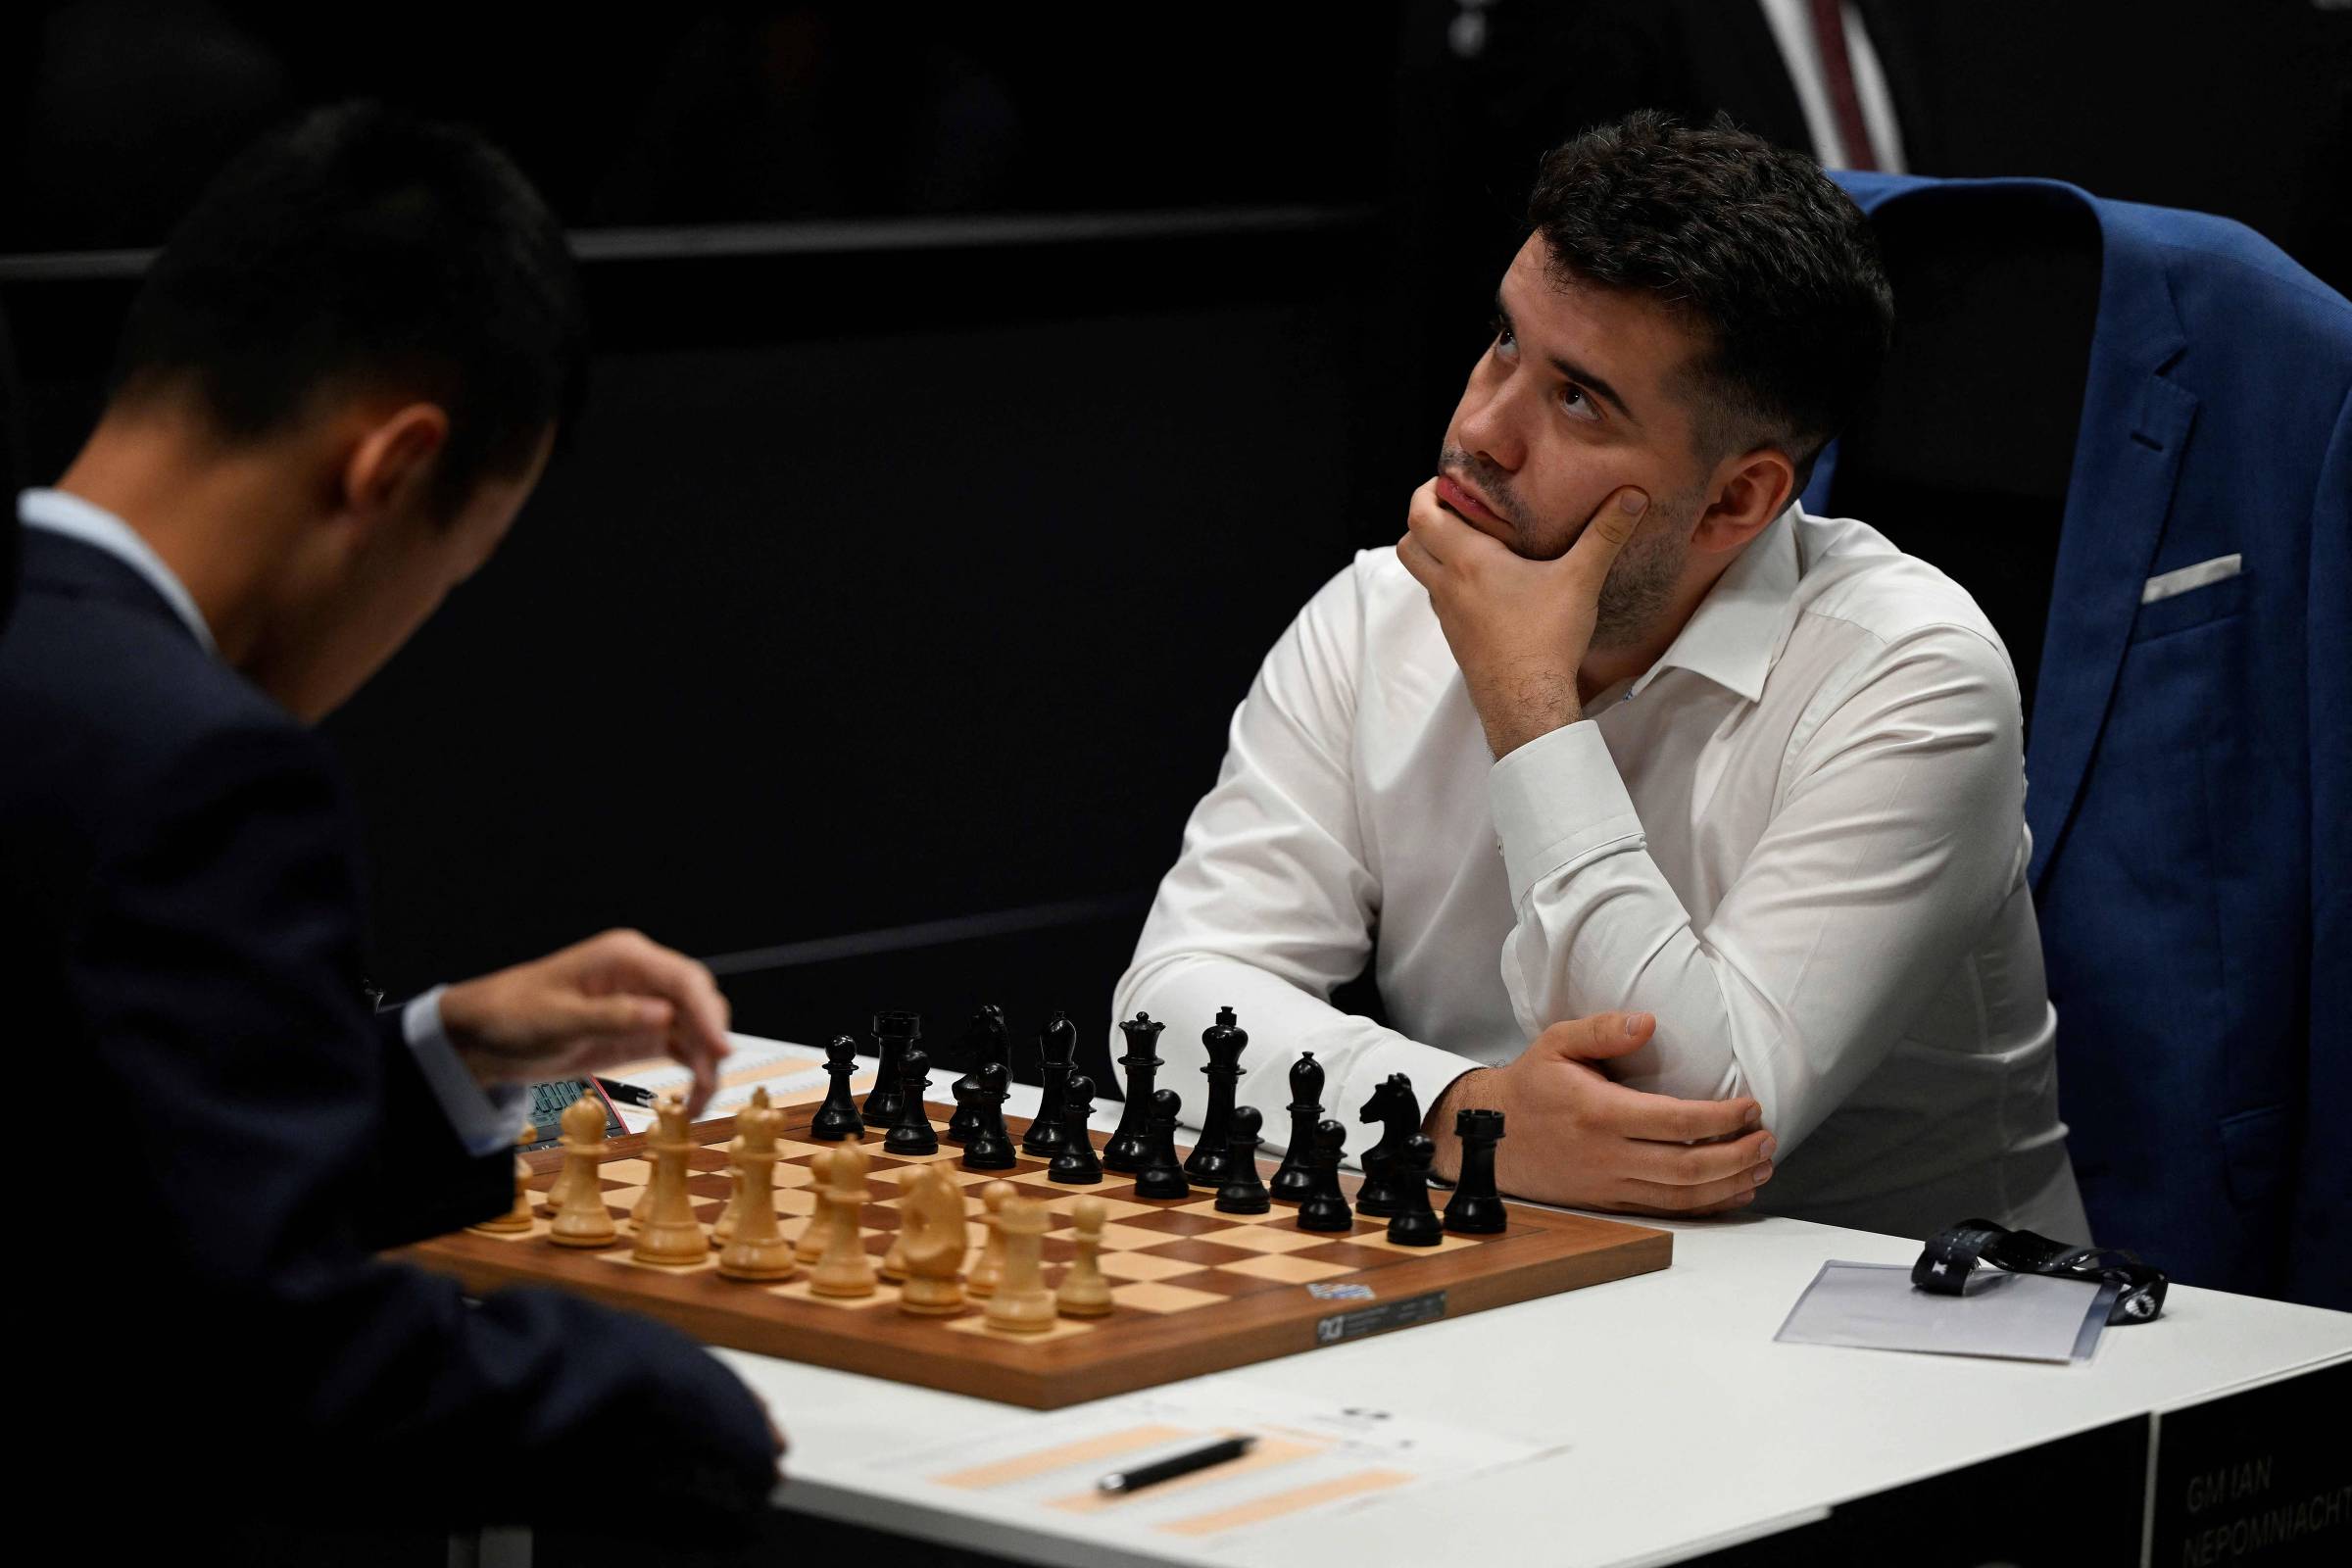 Chessms - Magnus Carlsen, atual campeão Mundial de xadrez